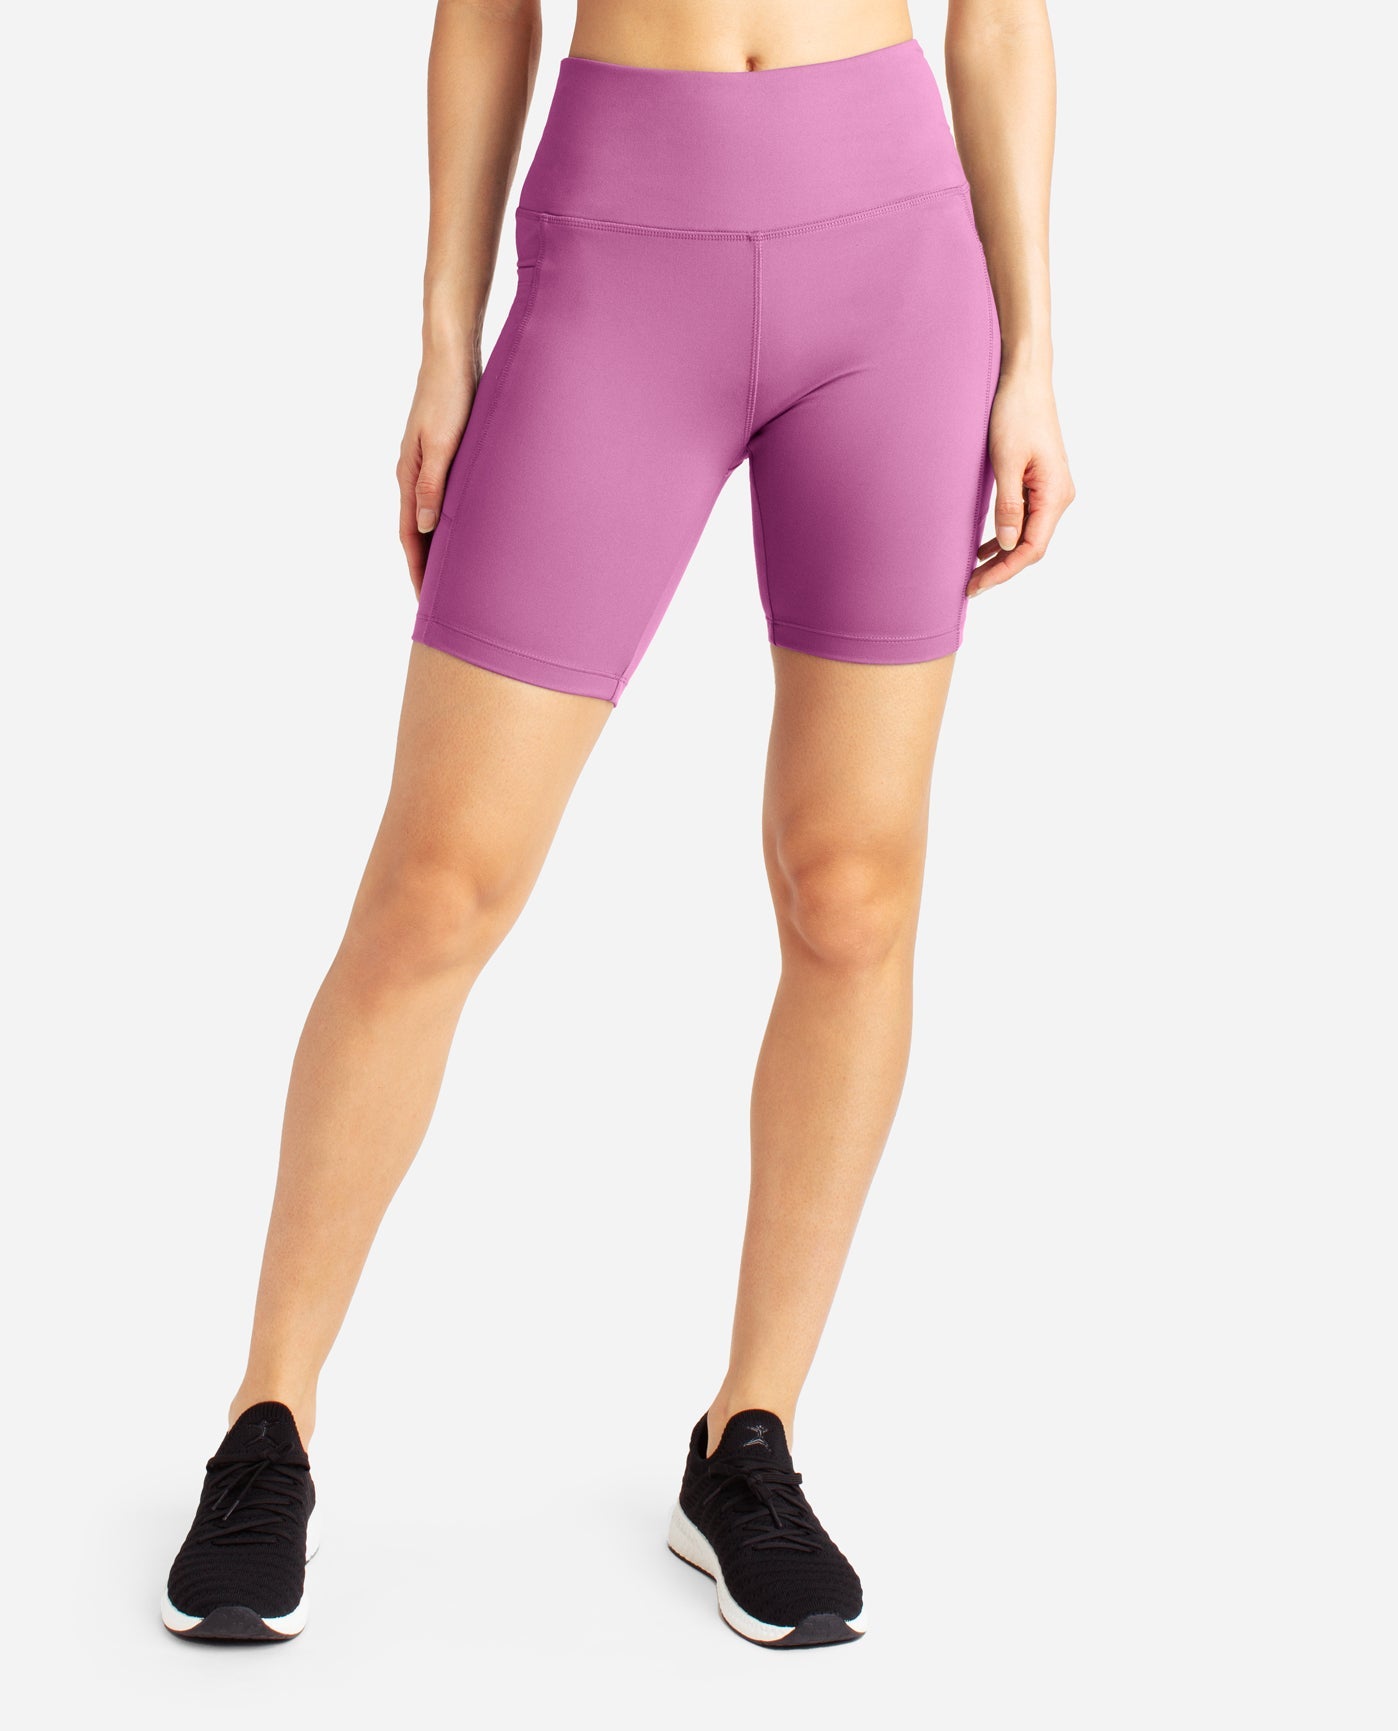 Danskin Daskin Now Athletic Shorts Purple Size M - $3 - From Lillian